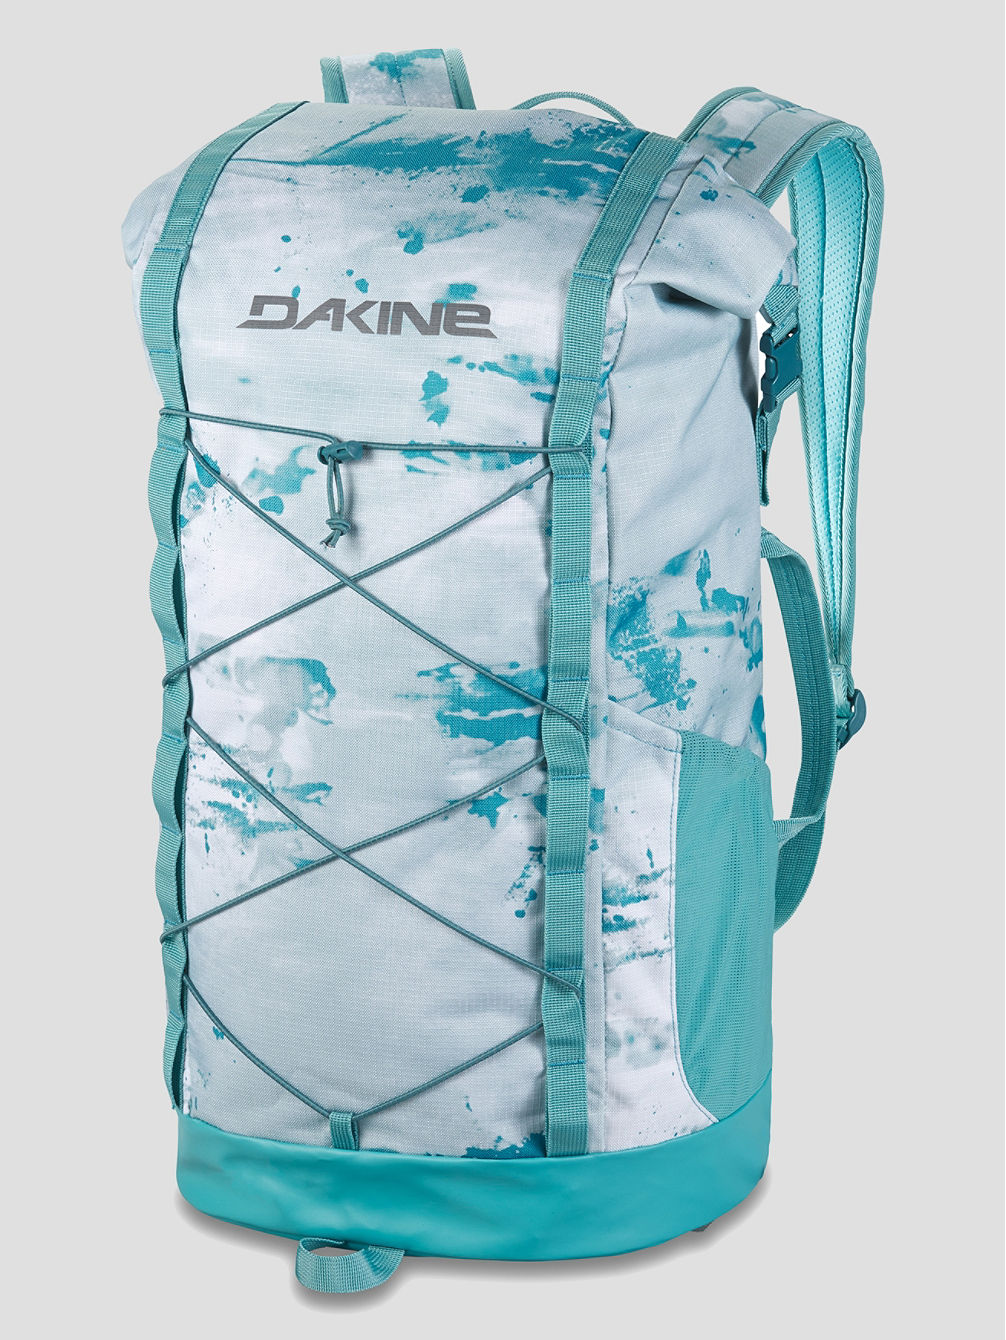 Mission Surf Roll Top 35L Backpack